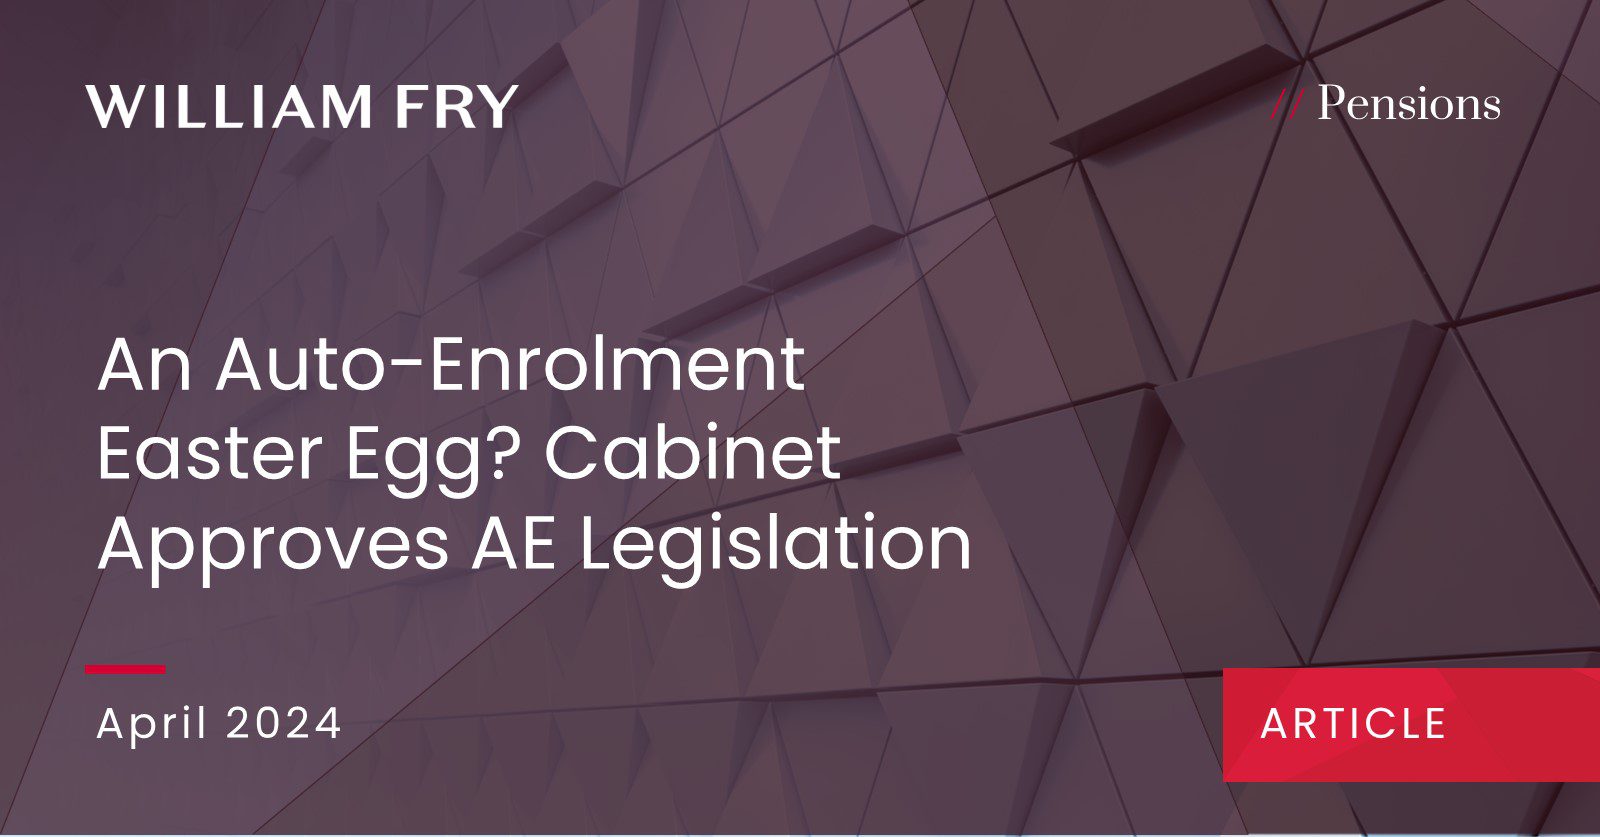 An Auto-Enrolment Easter Egg? Cabinet Approves AE Legislation